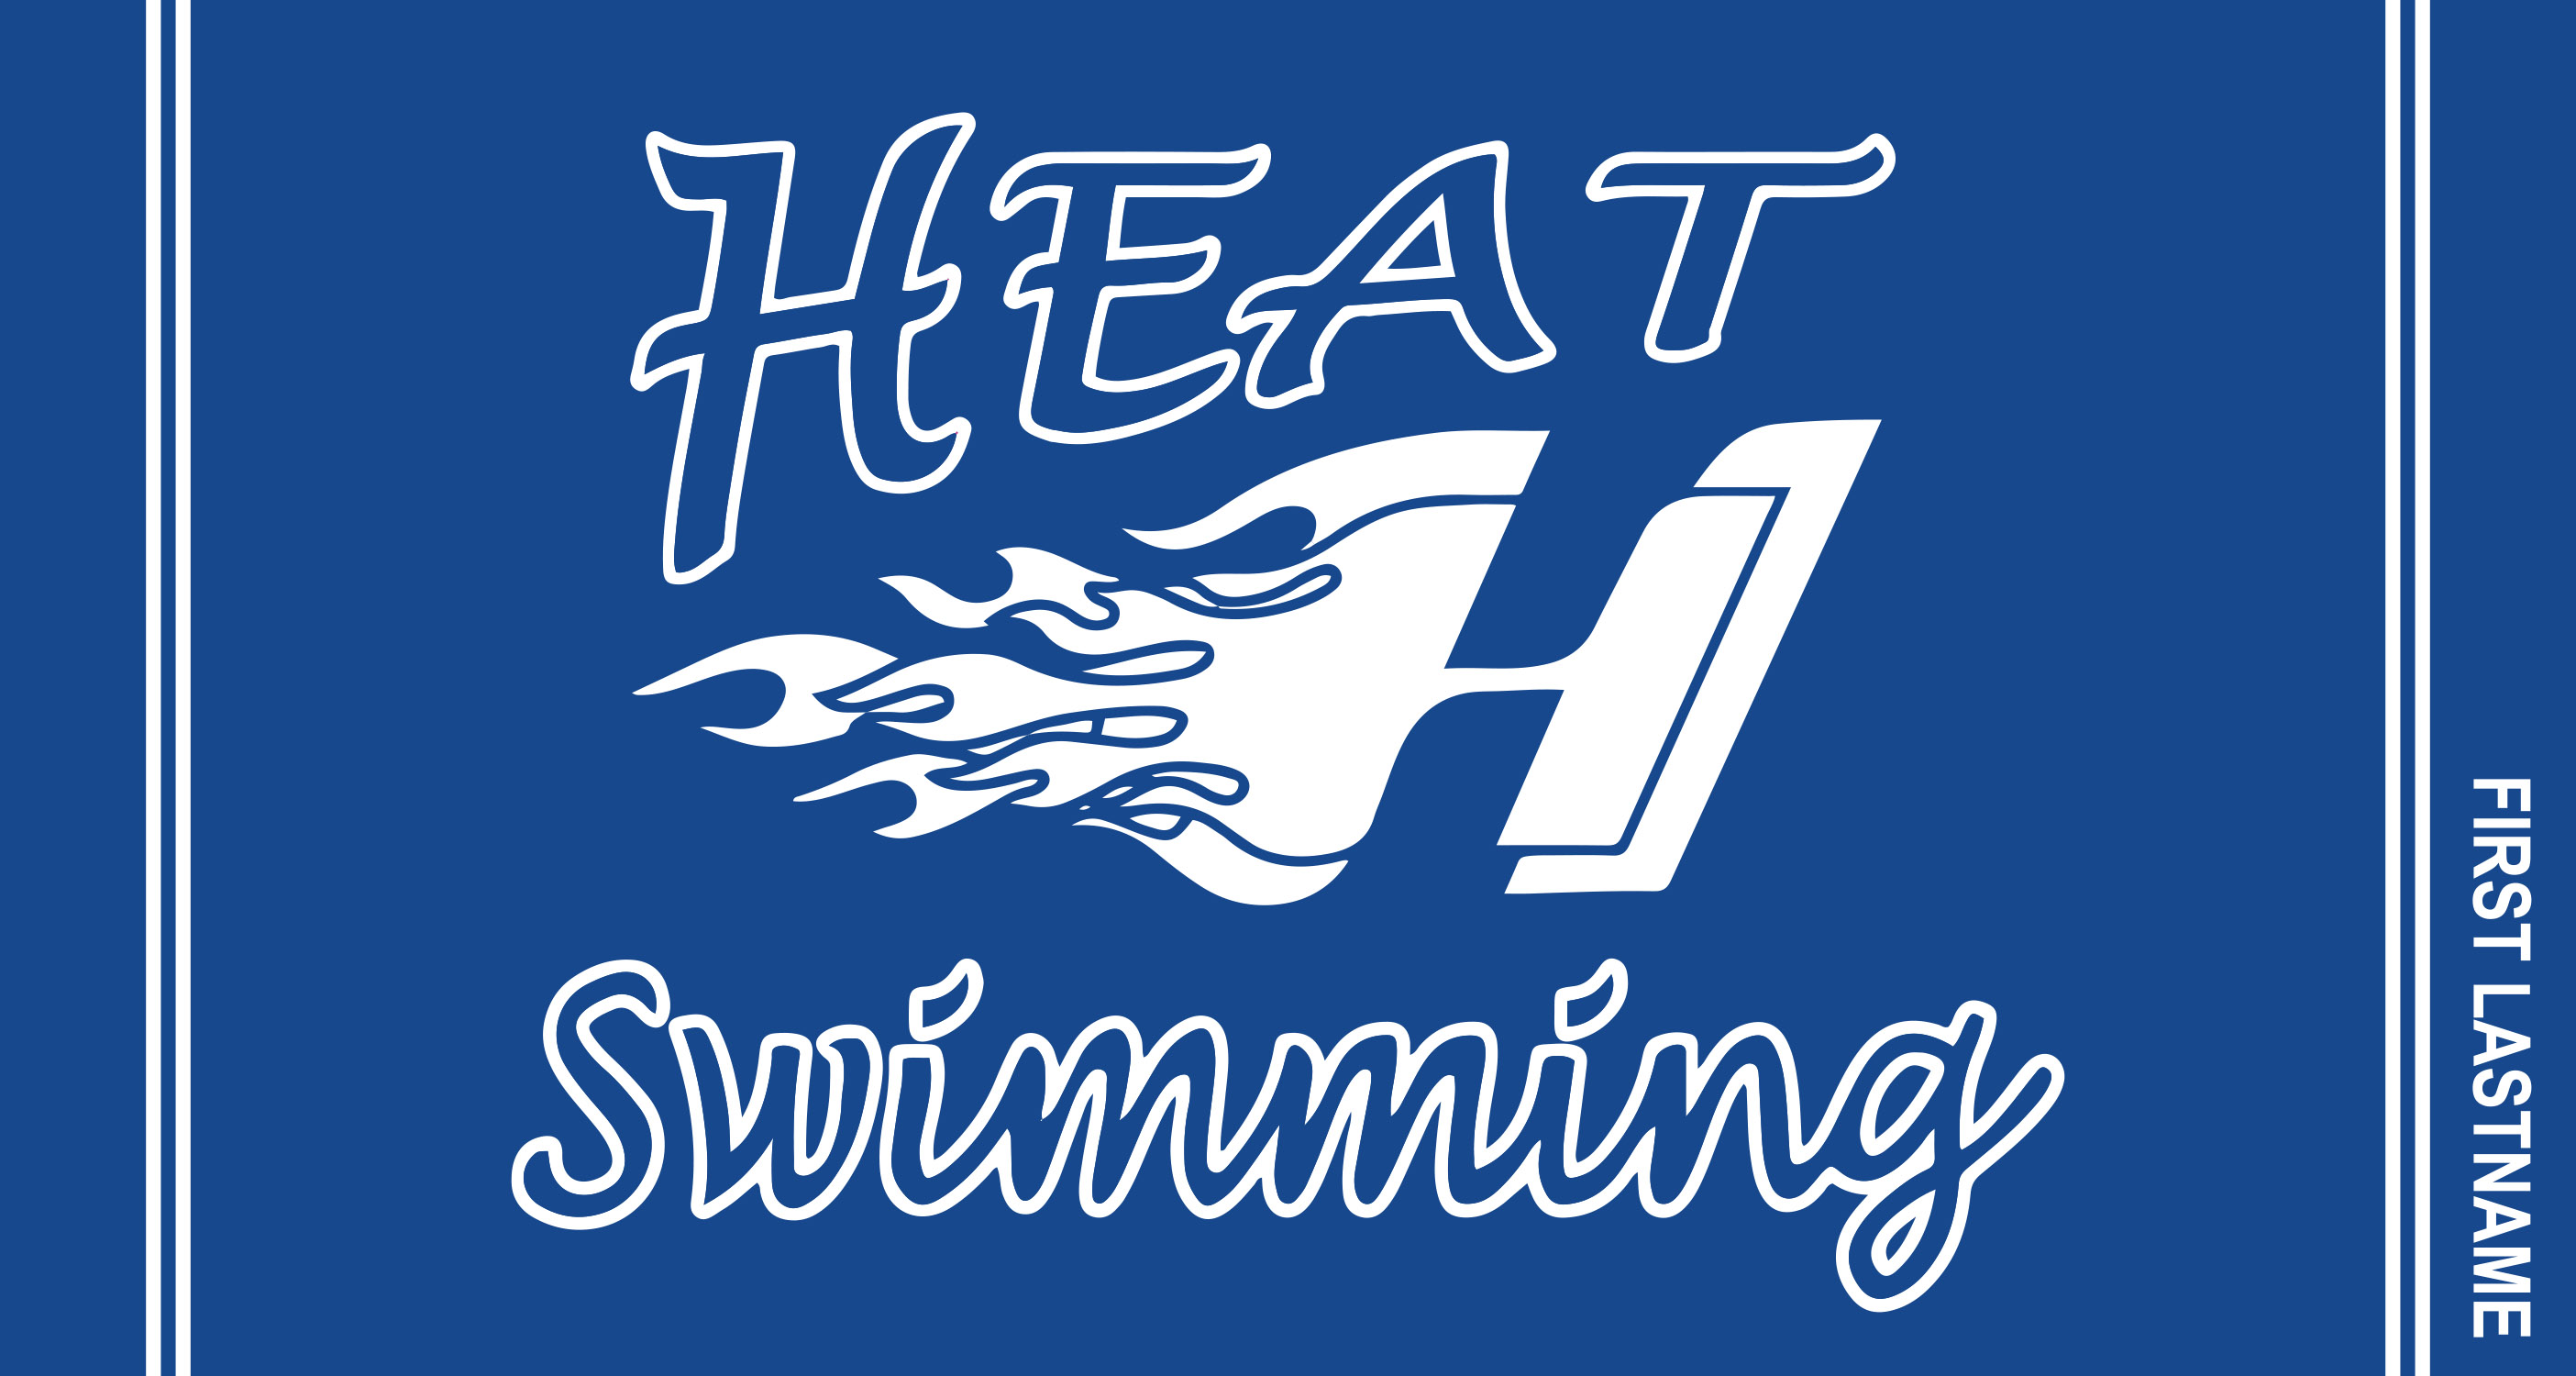 00612-HeatSwimming-30x60_V2-PROOF